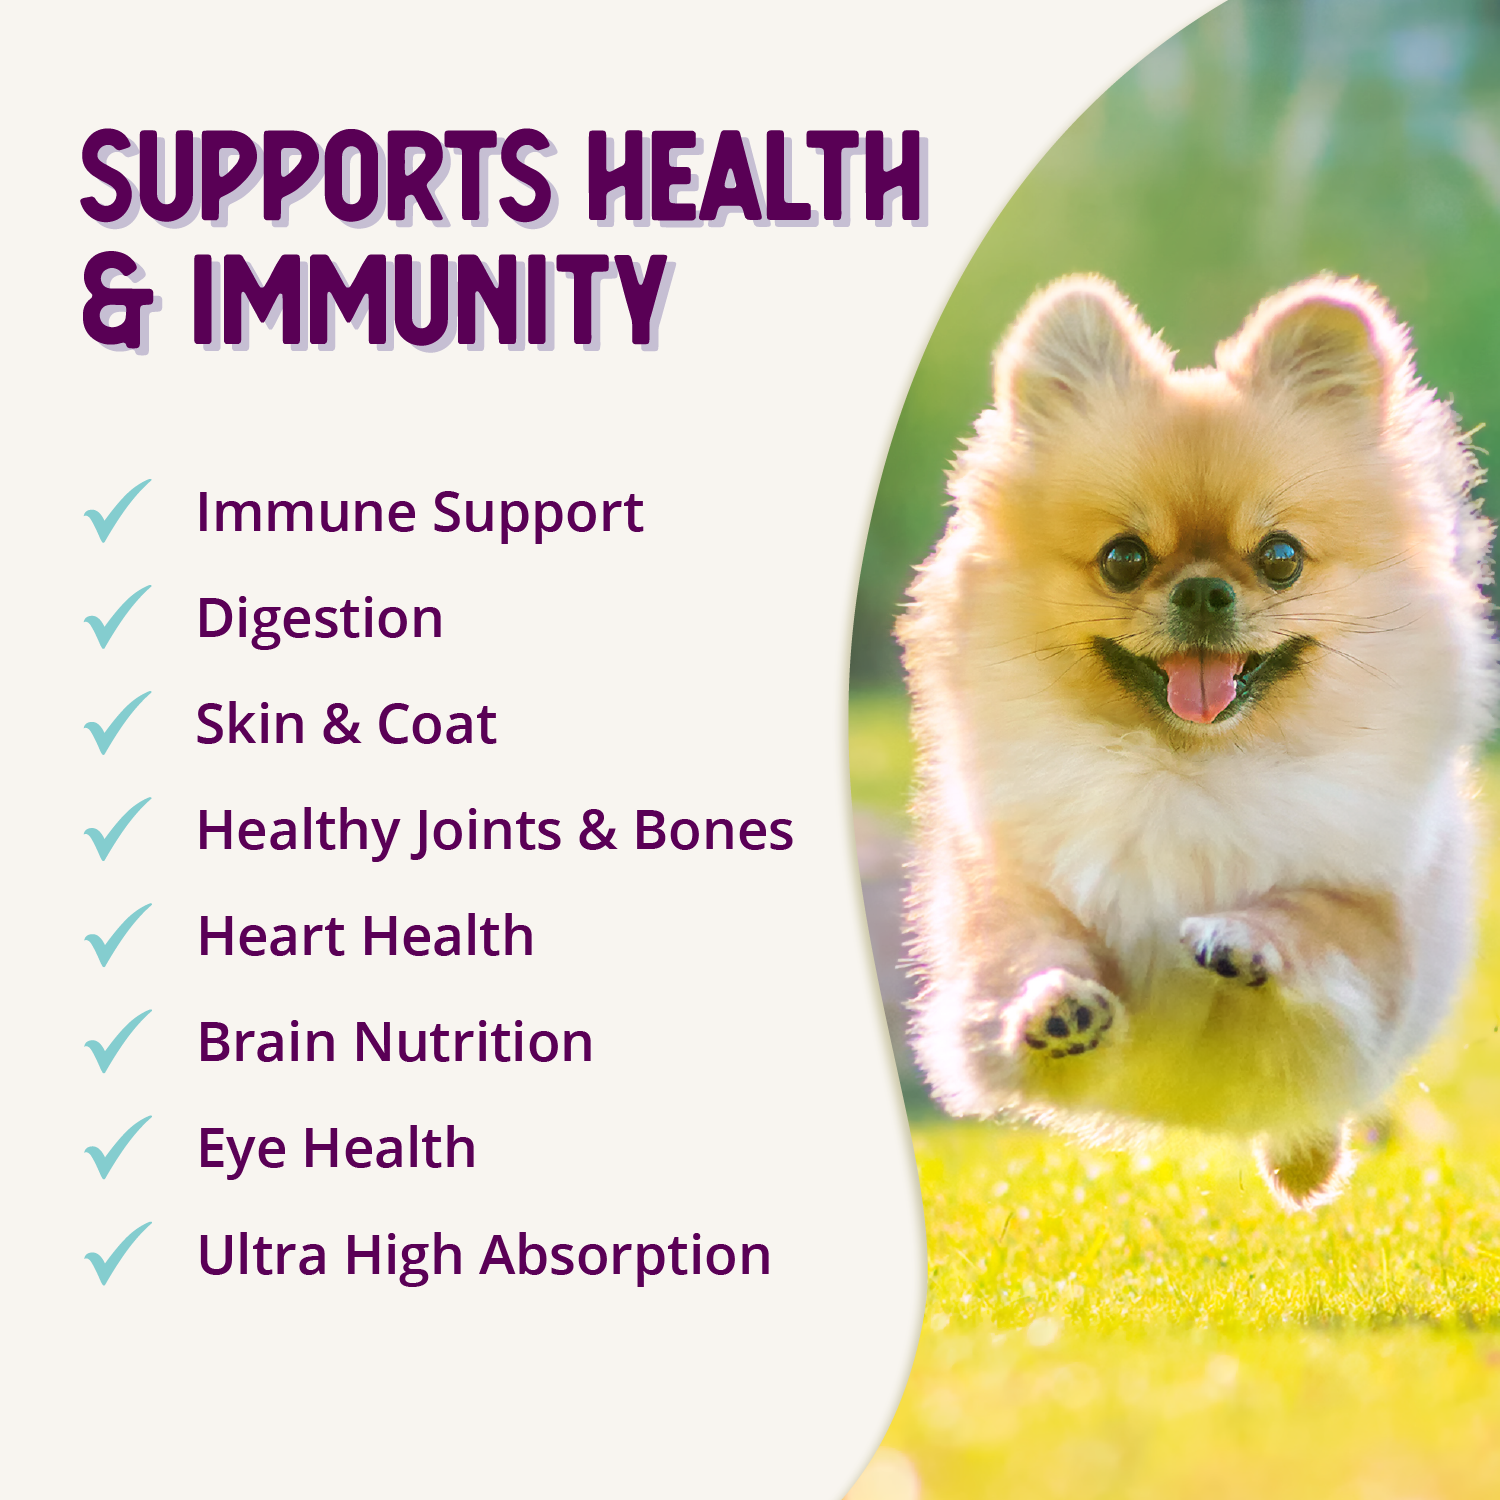 Advanced Immunity Supports Health & Immunity